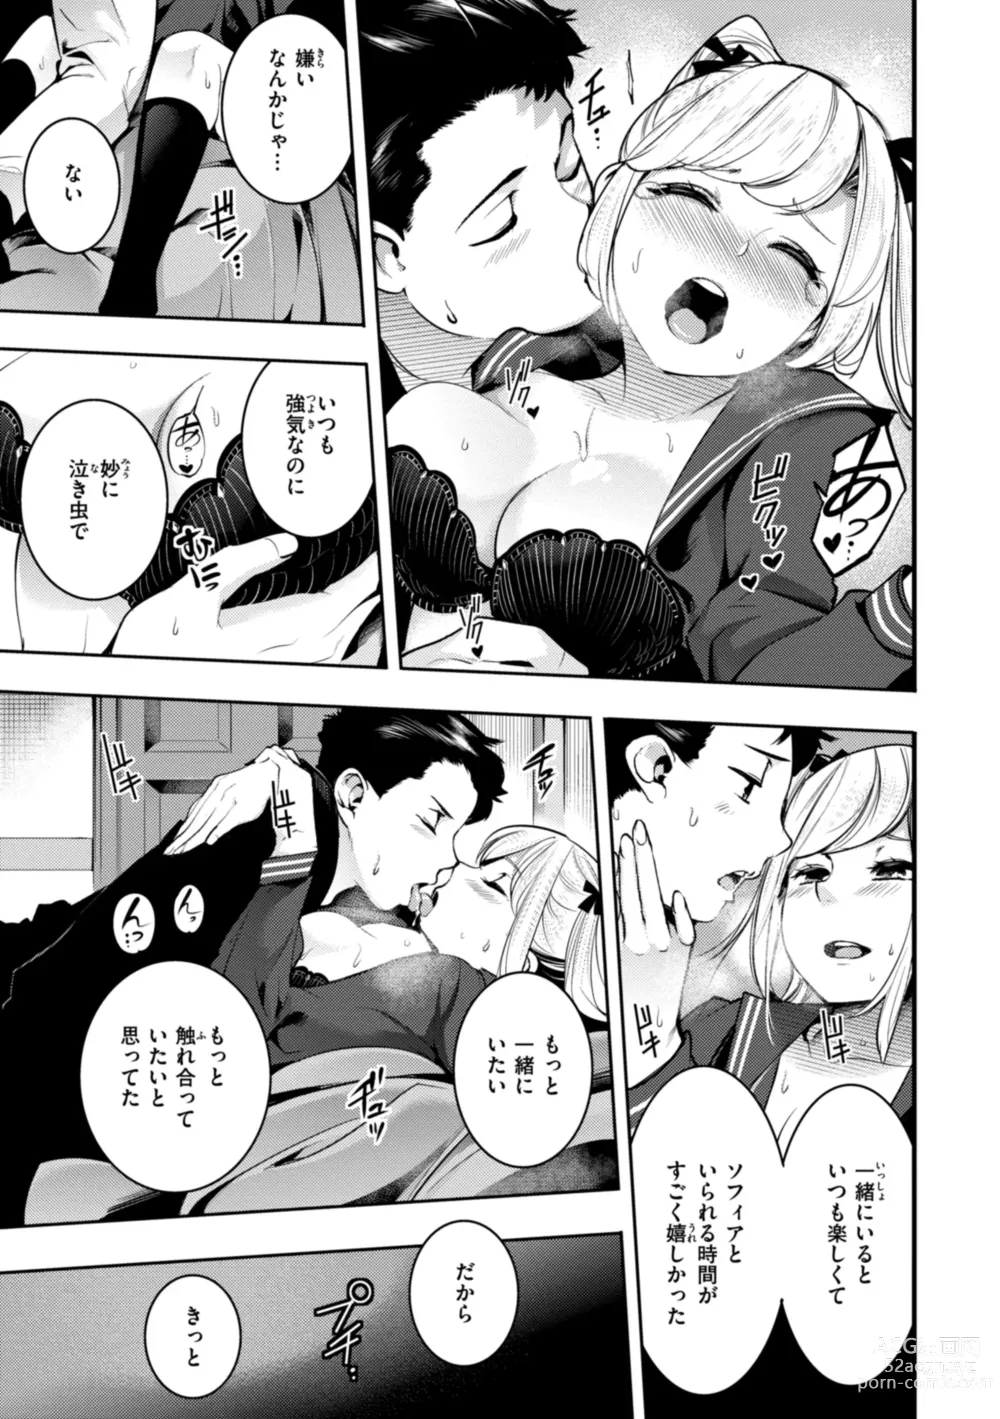 Page 11 of manga Pure Paradise